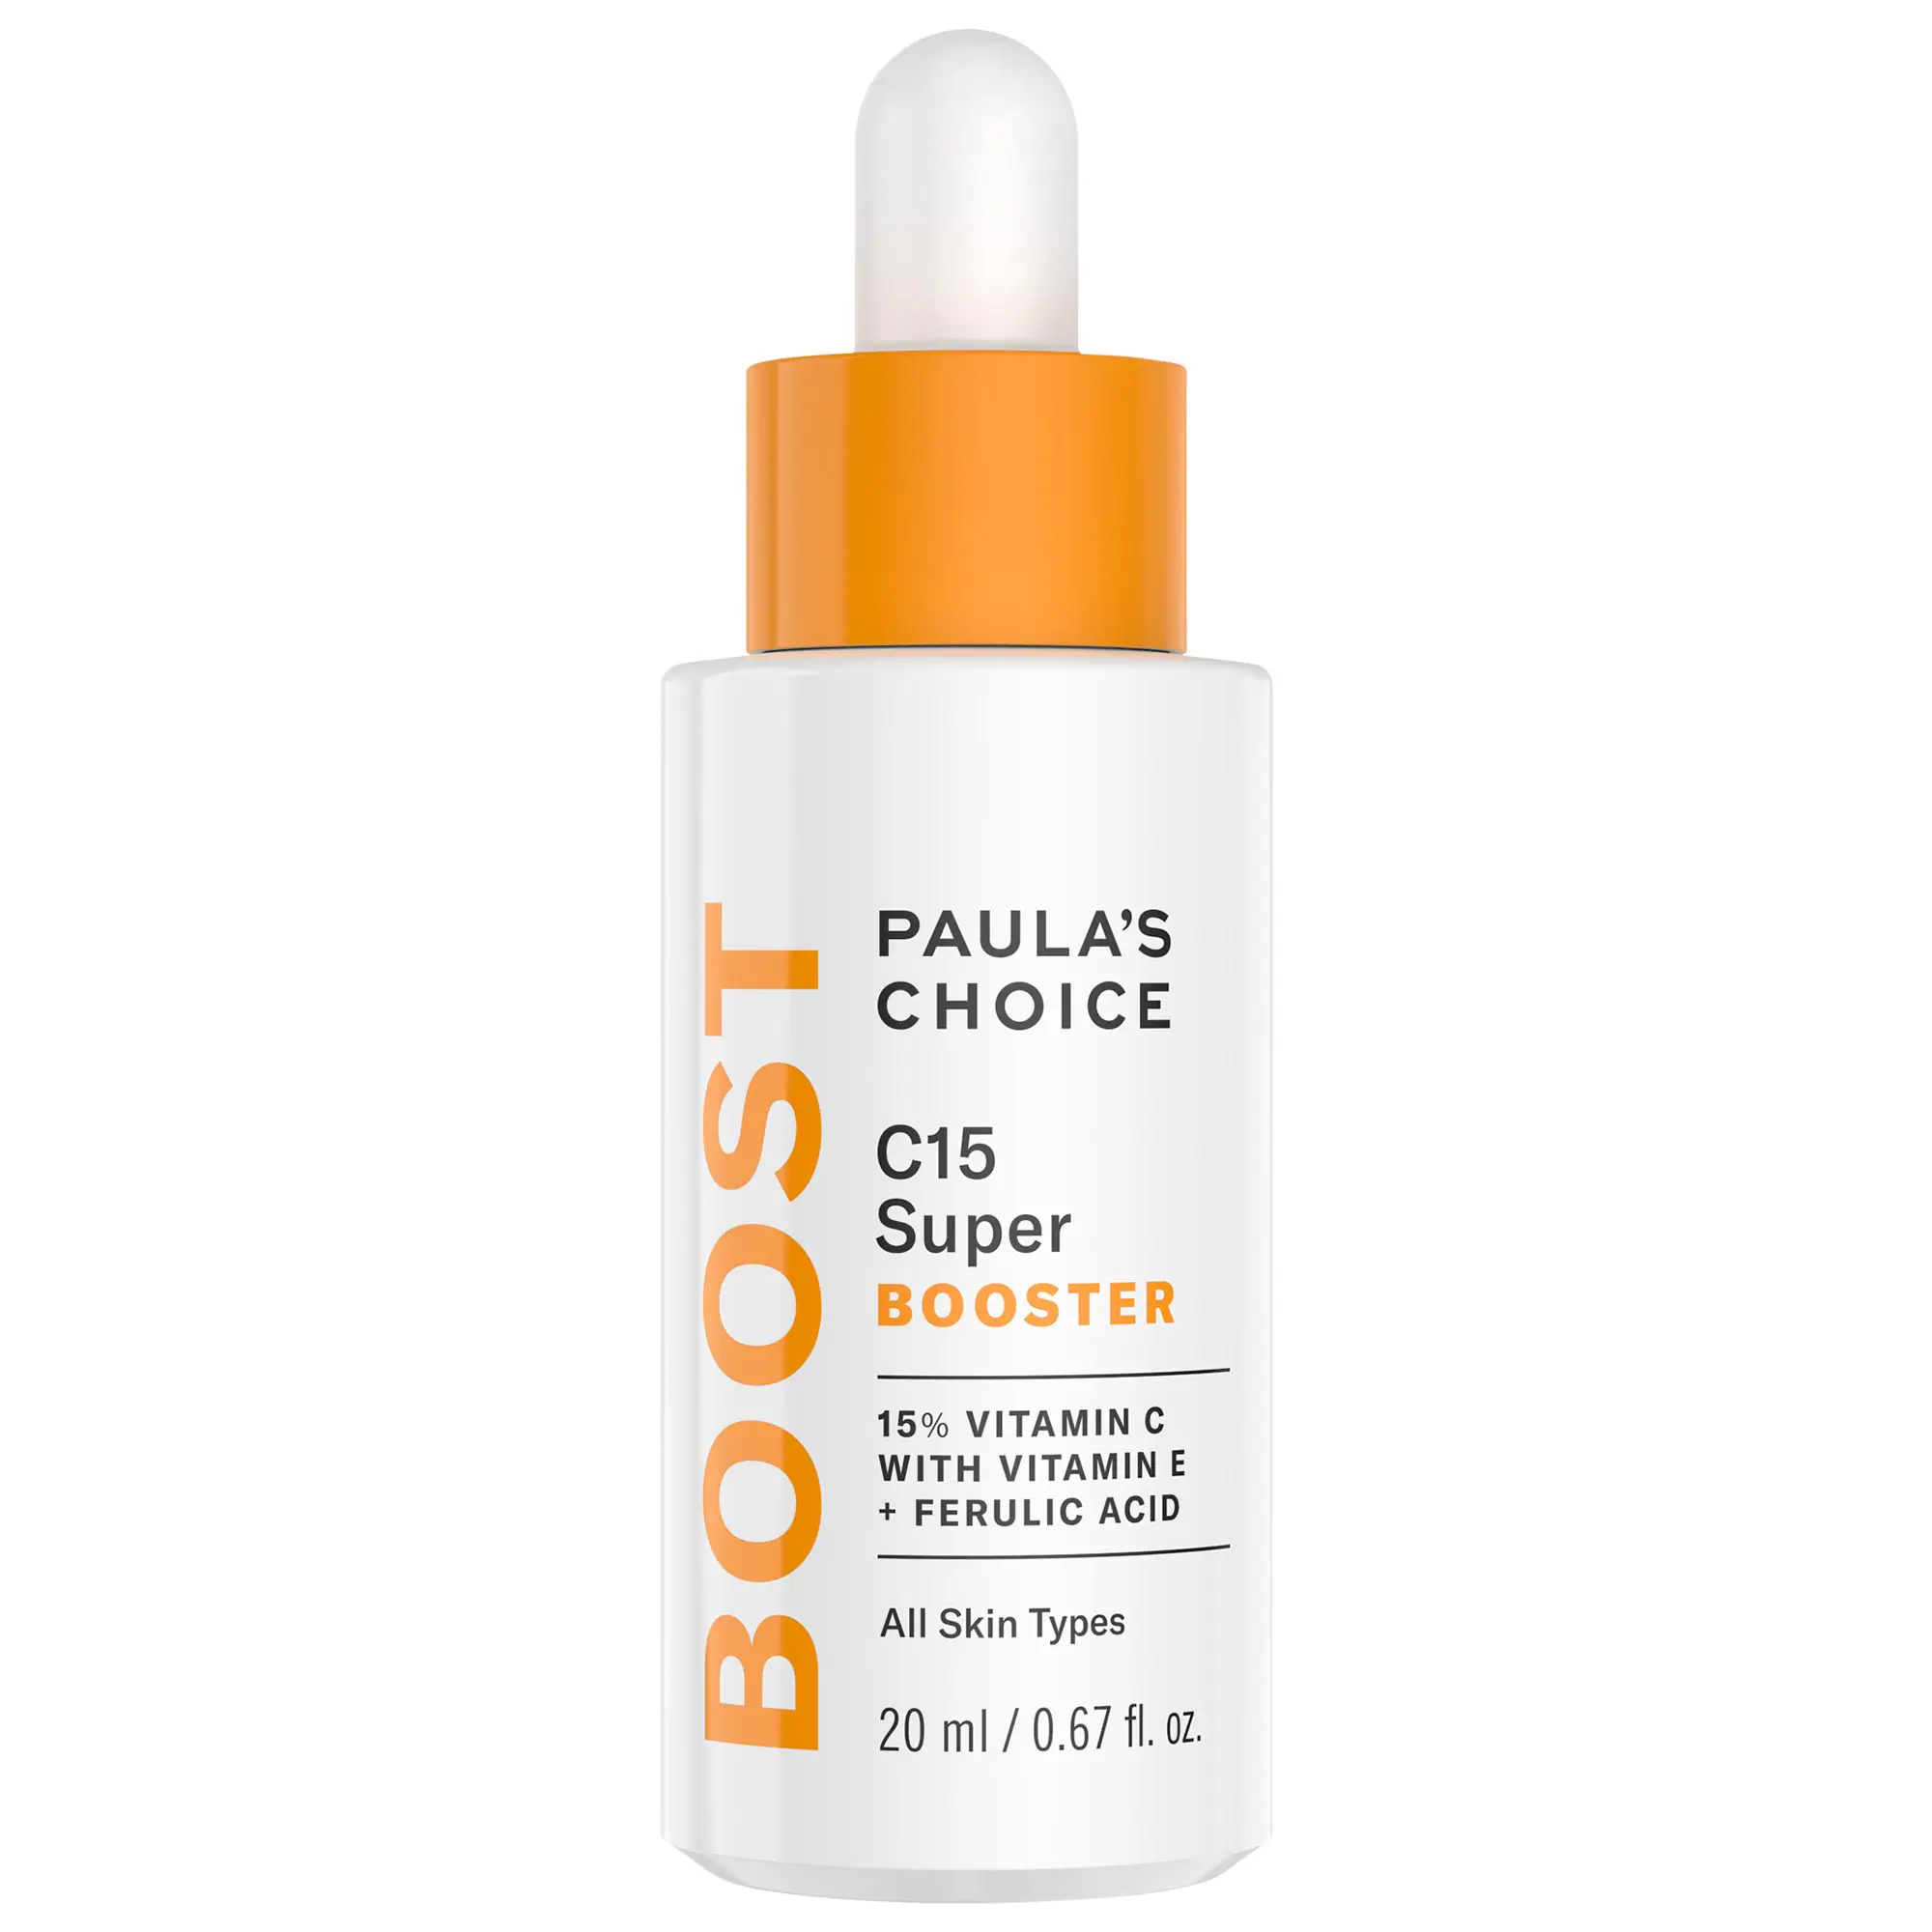 Paula's Choice
C15 Vitamin C Super Booster